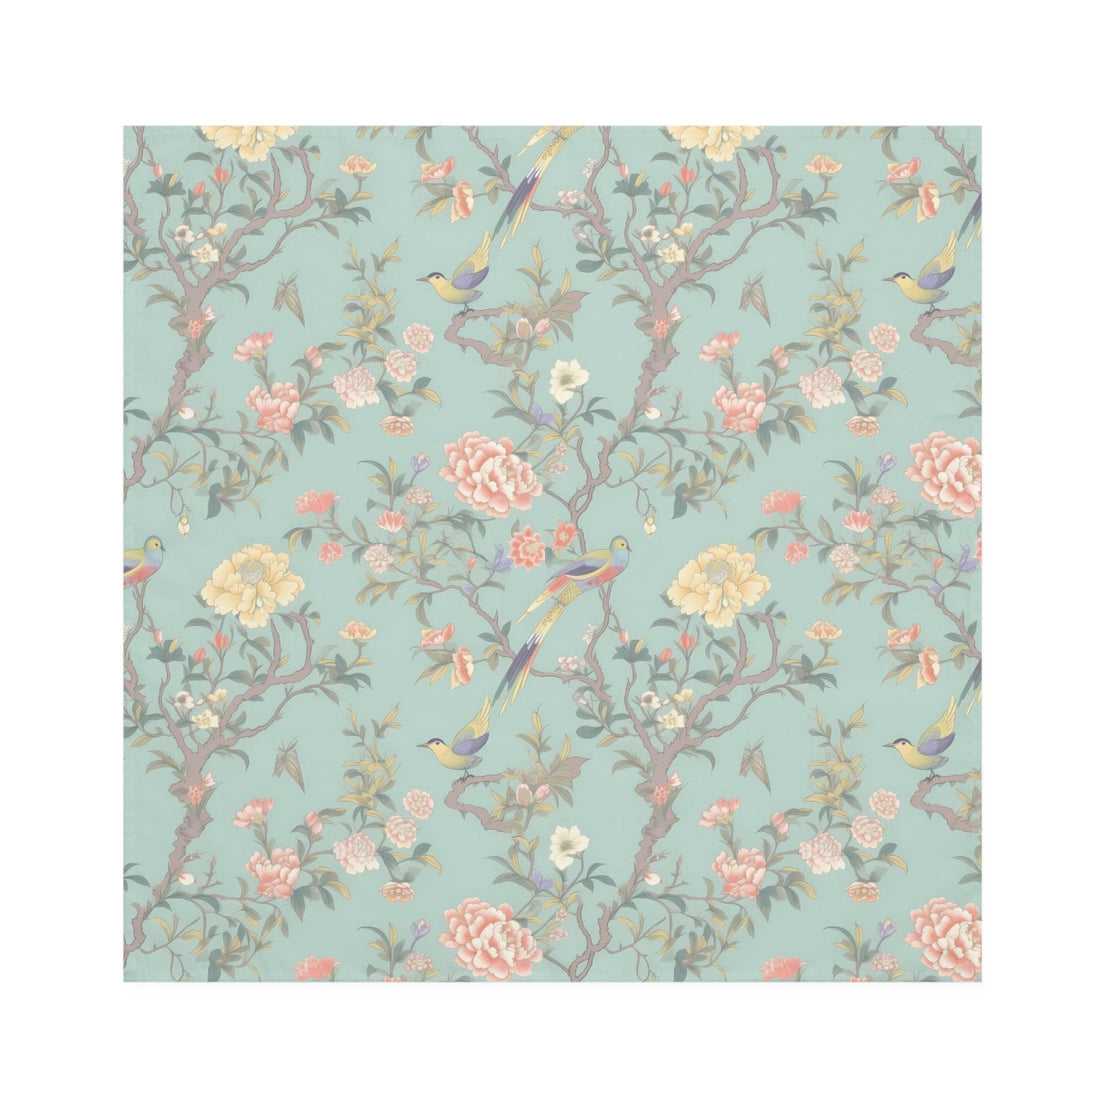 Kate McEnroe New York Pastel Chinoiserie Cloth Napkins, Set of 4, Elegant Floral and Bird Table LinensNapkins15541888431166700436